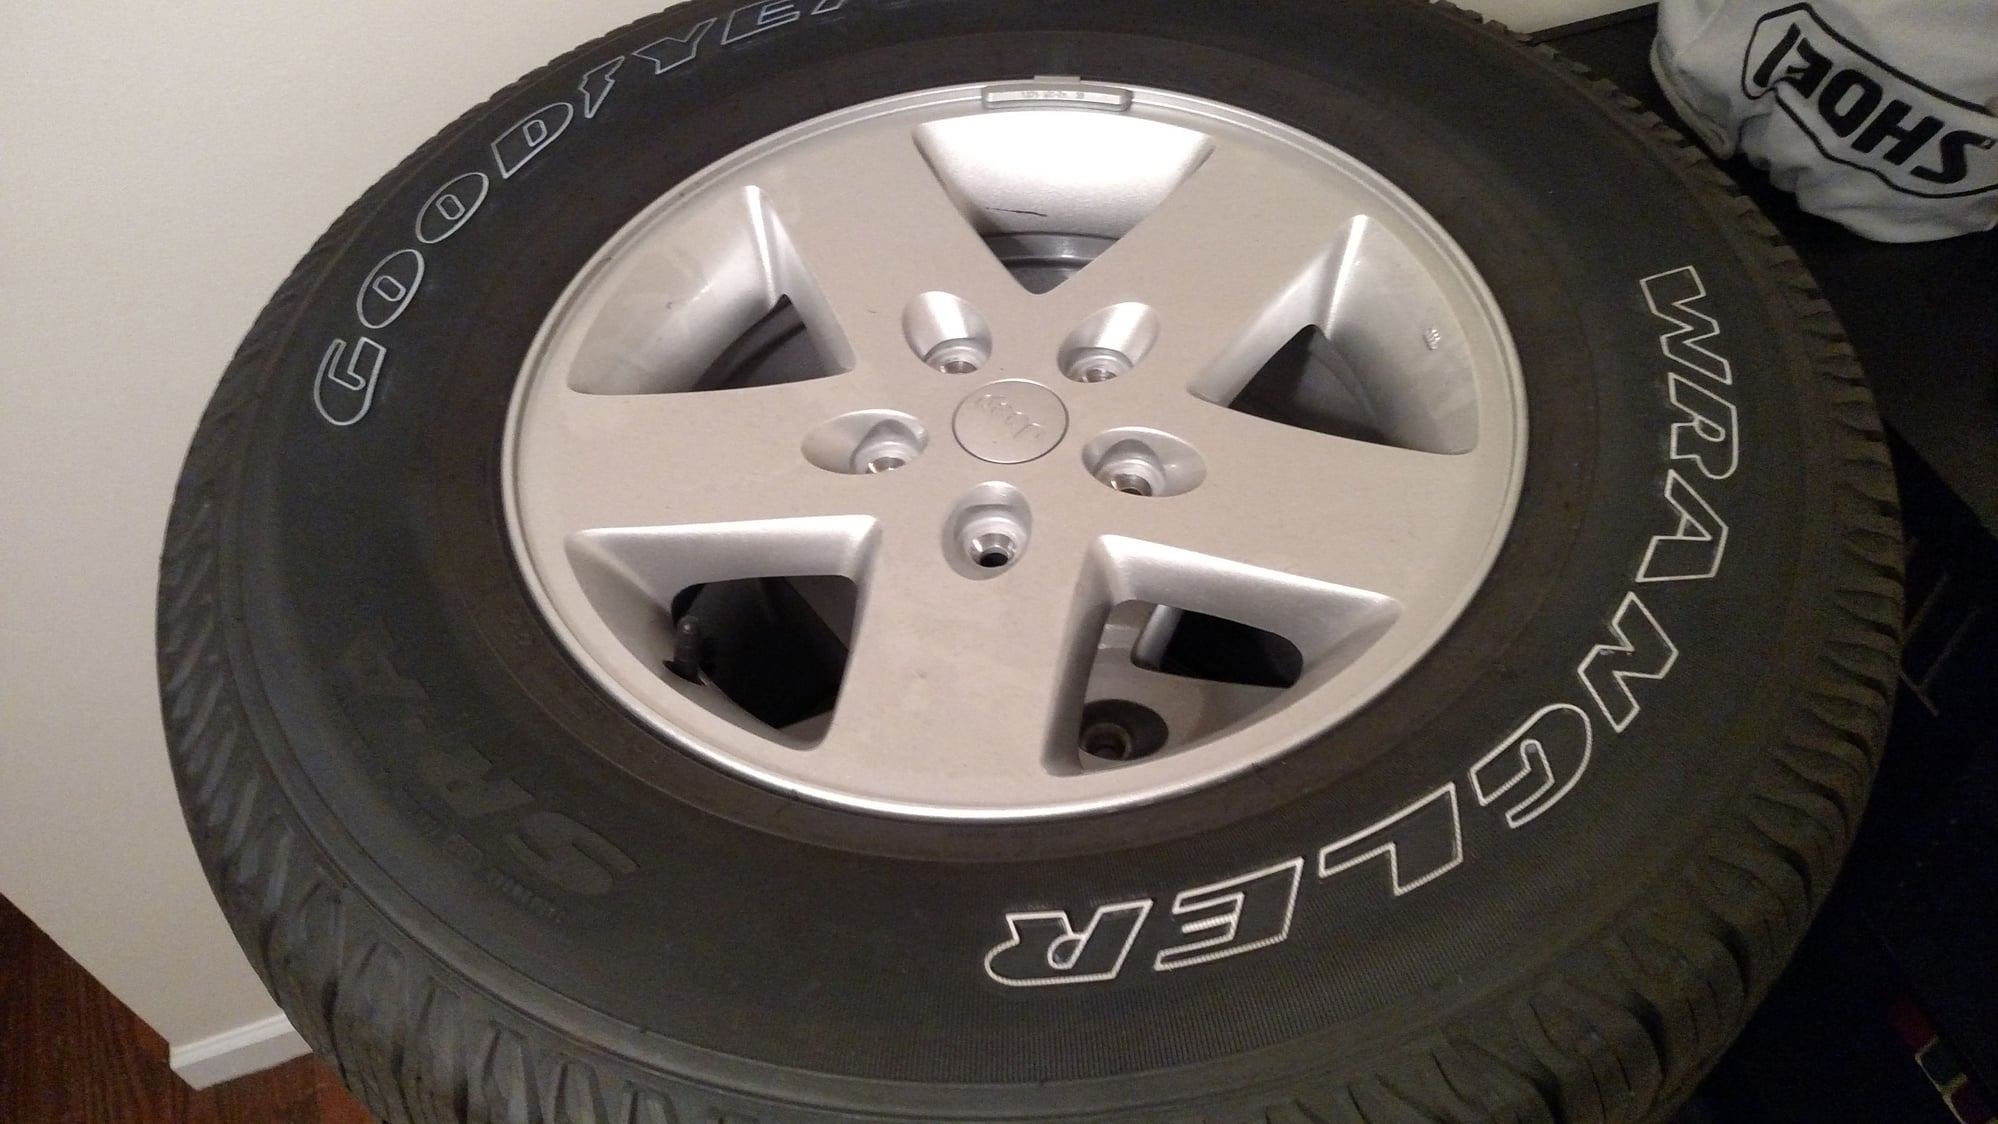 Wheels and Tires/Axles - (Virginia) New 2017 OEM Goodyear Wrangler SRA tires on stock wheels--all 5 - New - Fredericksburg, VA 22407, United States